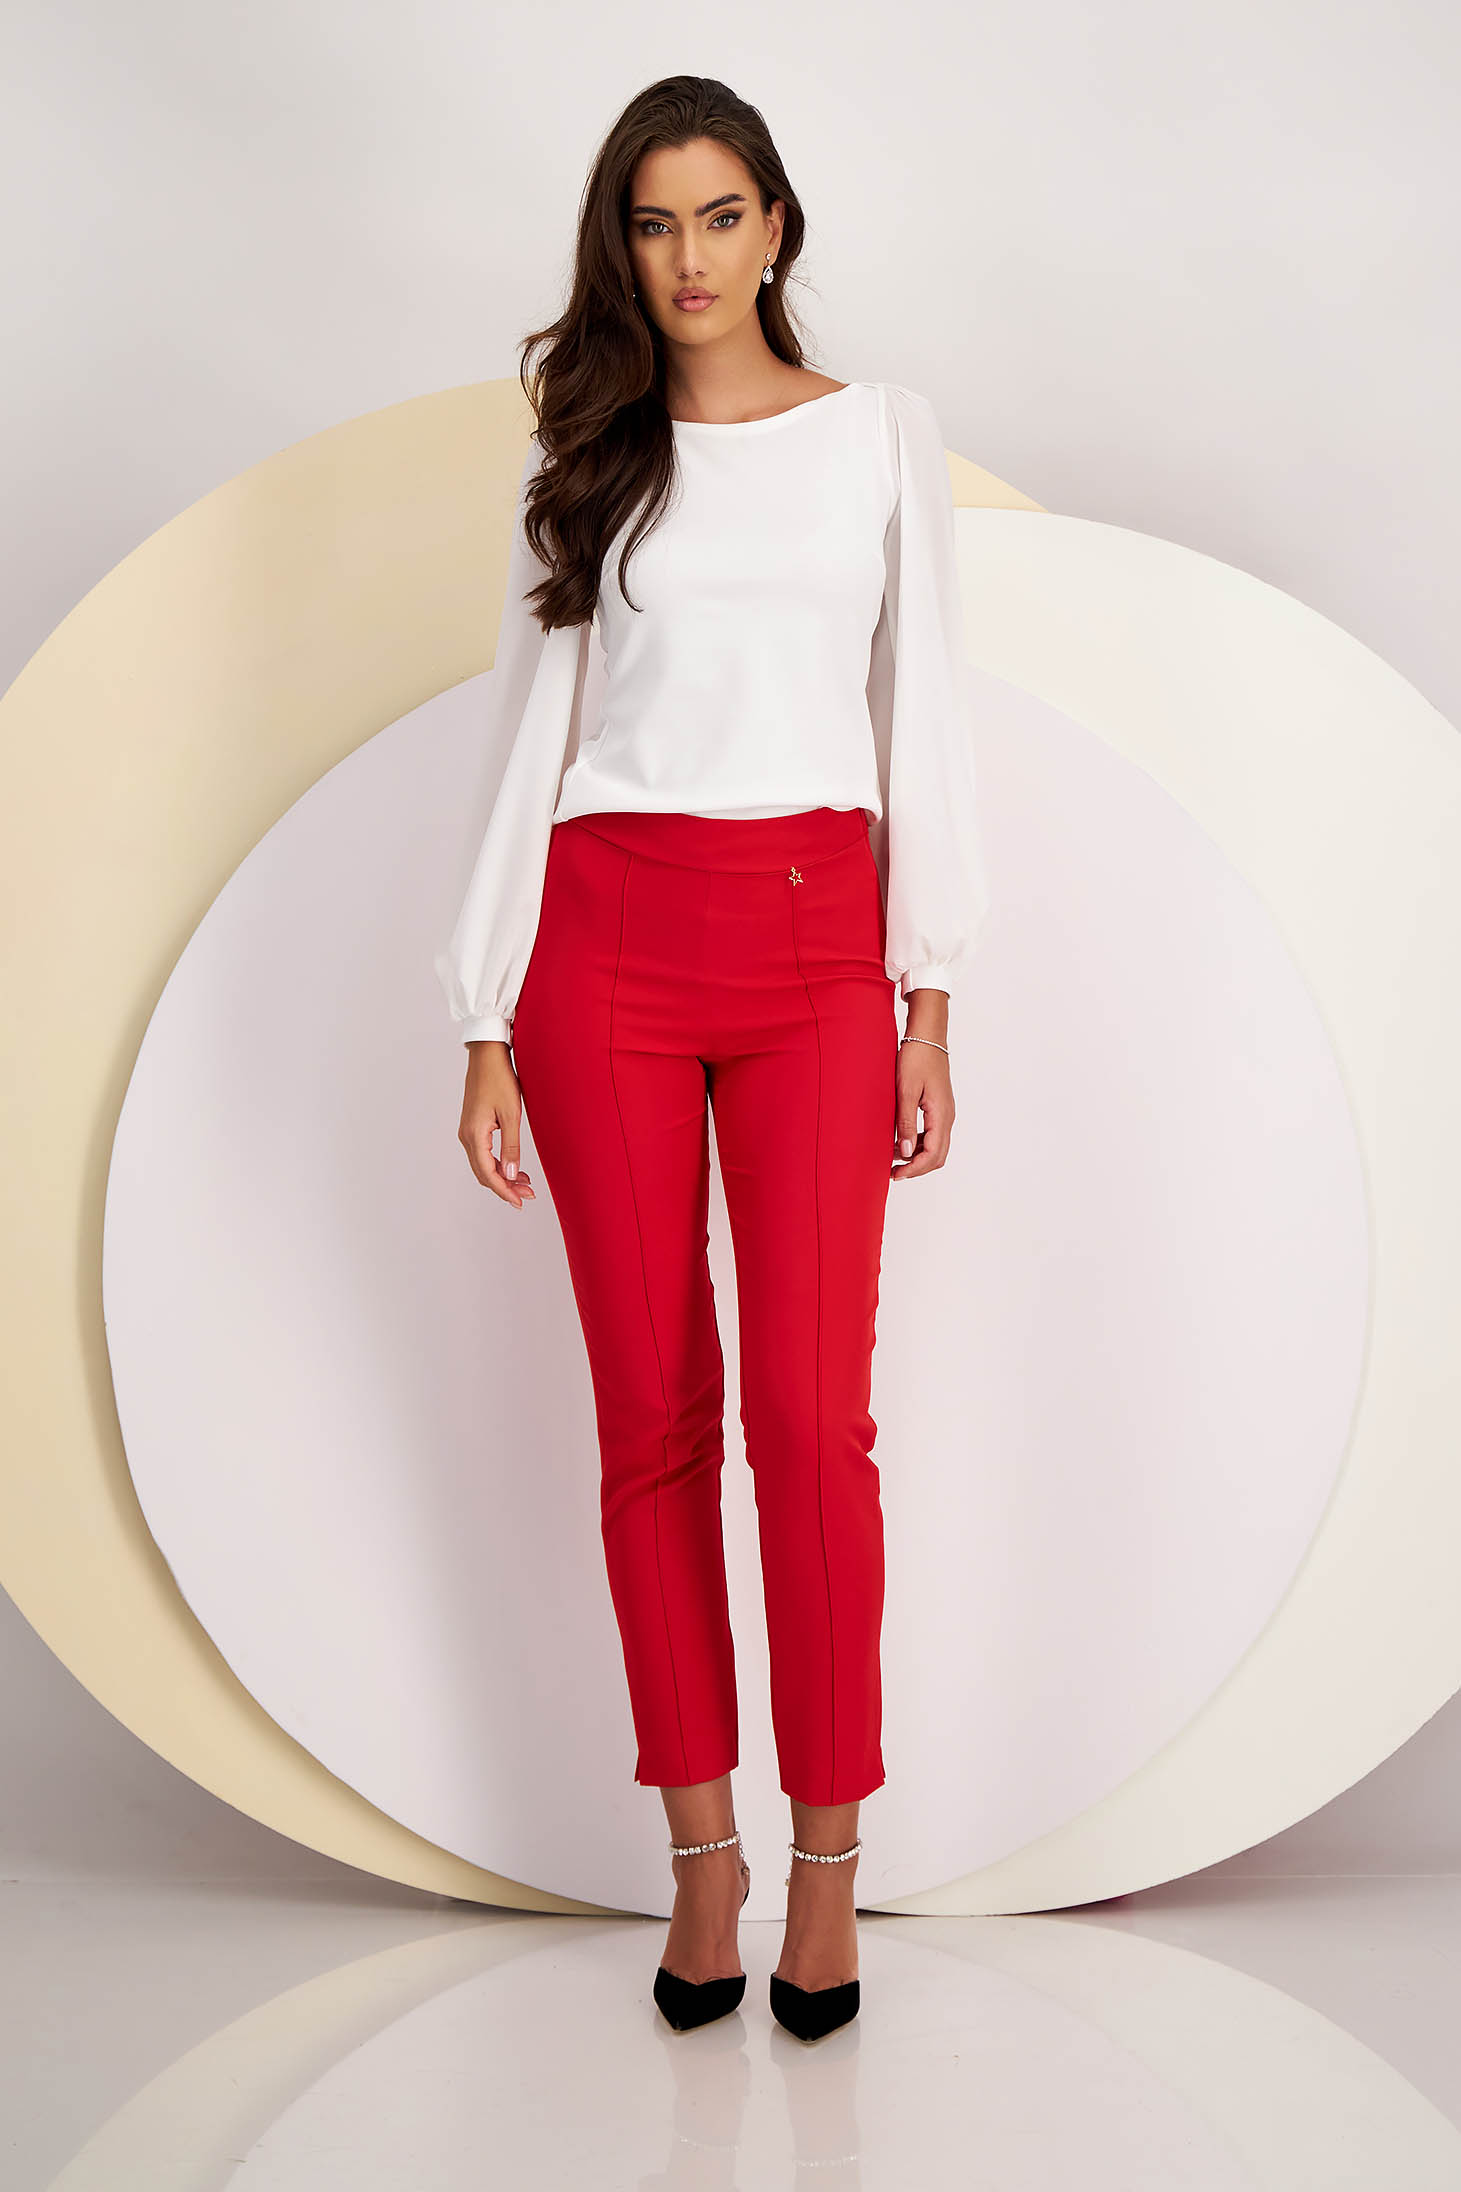 Pantaloni din stofa usor elastica rosii conici cu talie inalta - StarShinerS 5 - StarShinerS.ro